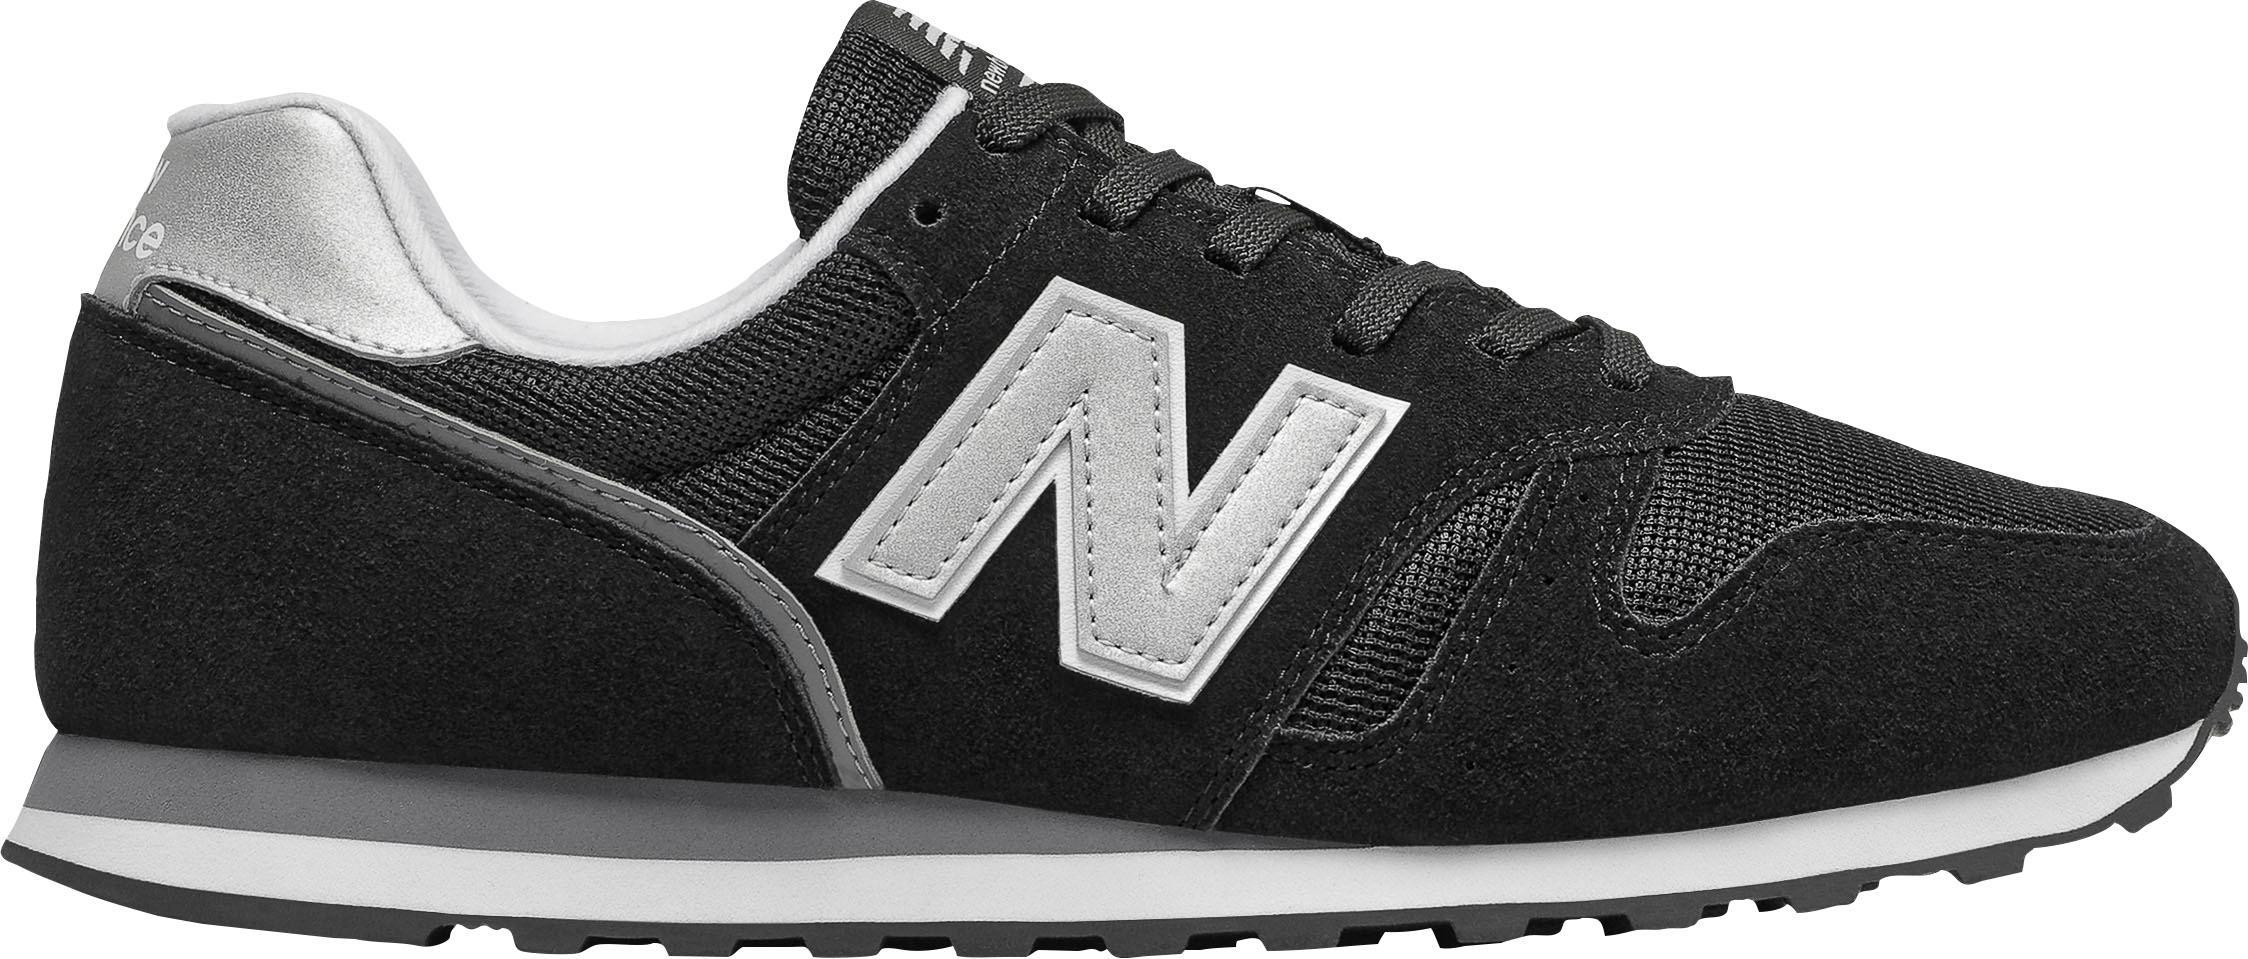 New Balance Herren 373v2 Sneaker, Schwarz (Black/White Ca2), 40.5 EU